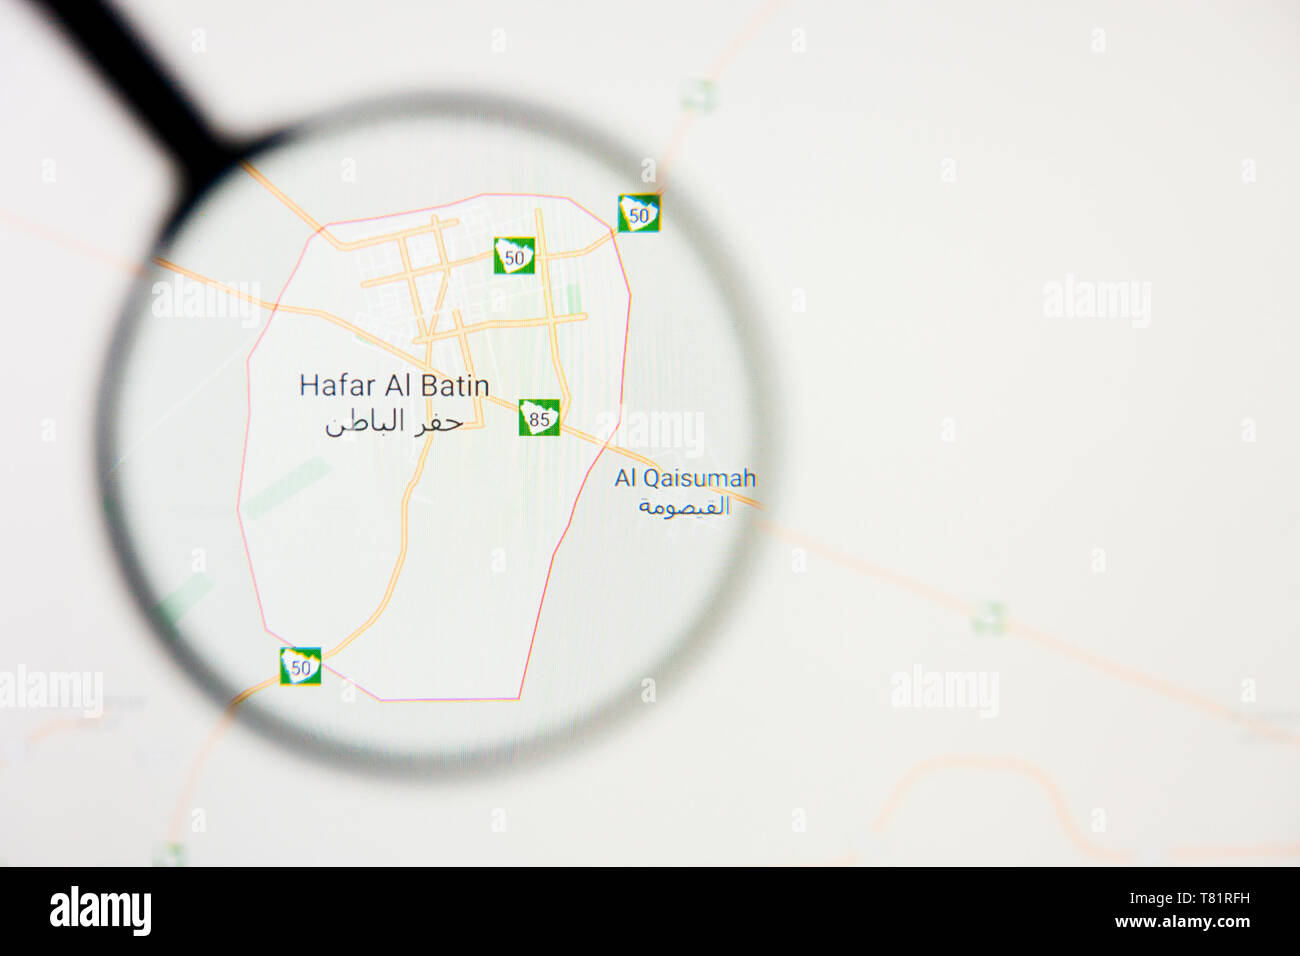 Hafar Al-Batin city visualization illustrative concept on screen through magnifying glass Stock Photo